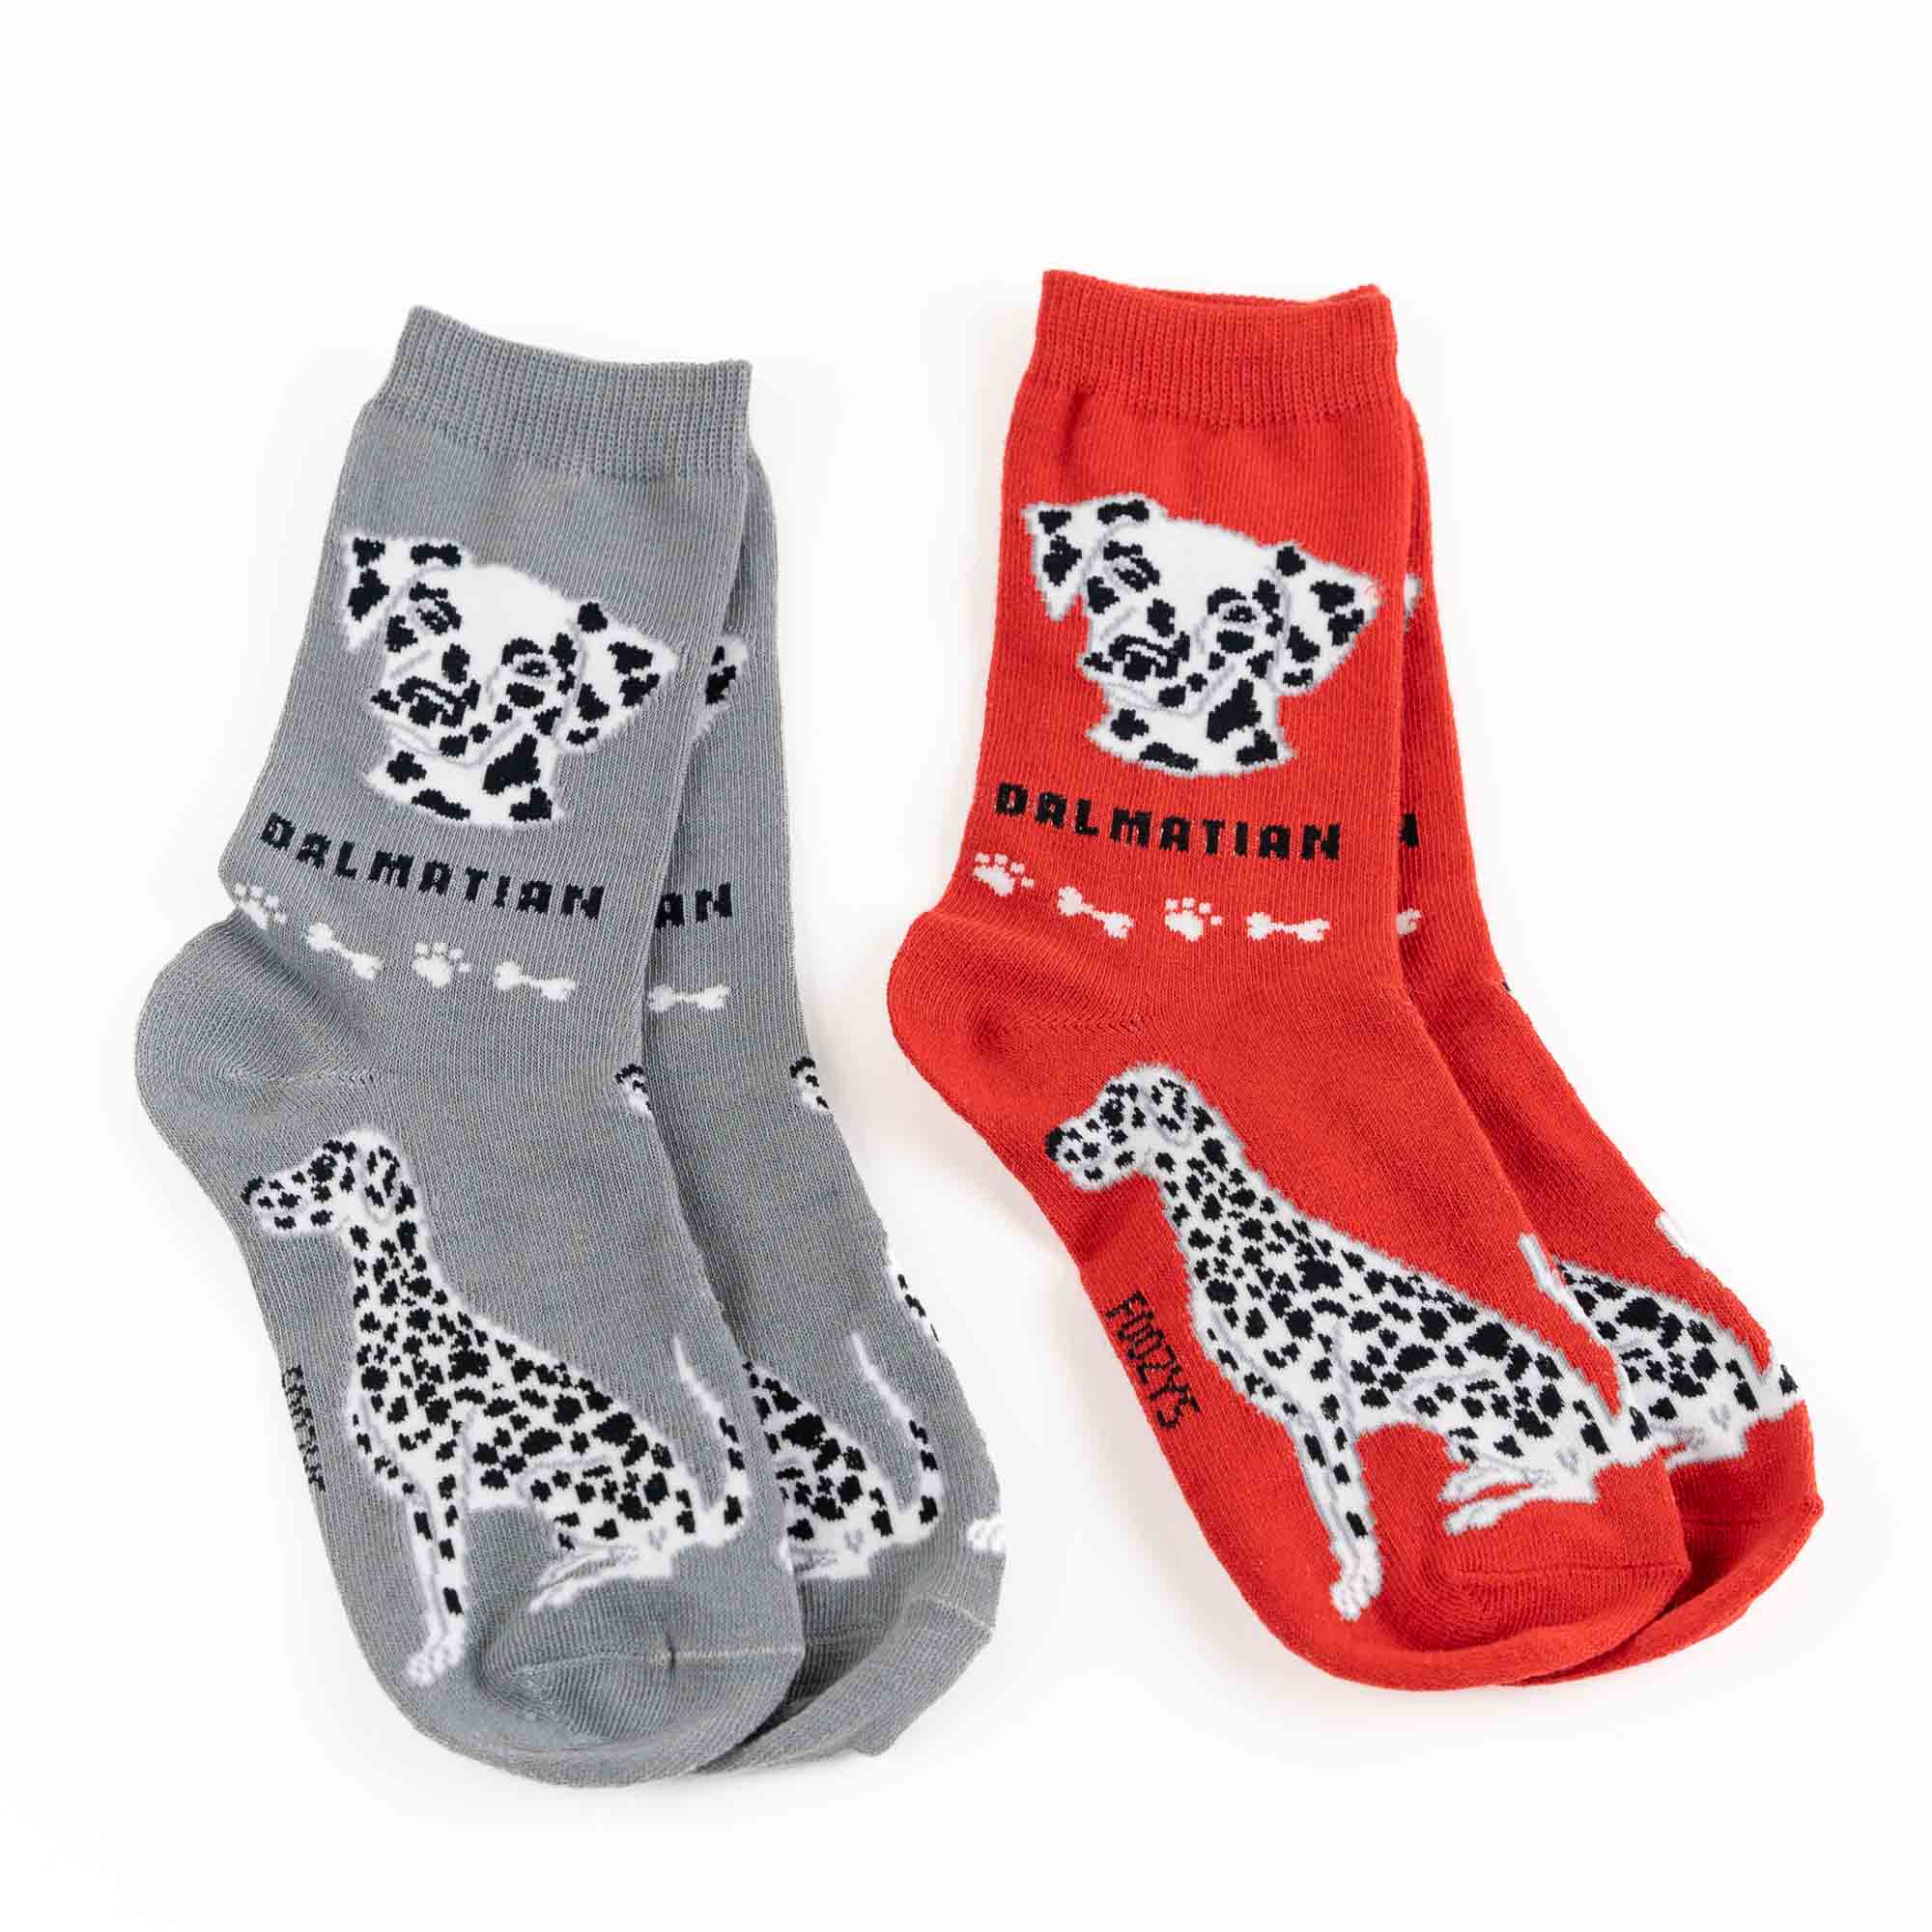 My Favorite Dog Breed Socks ❤️ Dalmatian Breed Dog Sock - 2 Set Collection